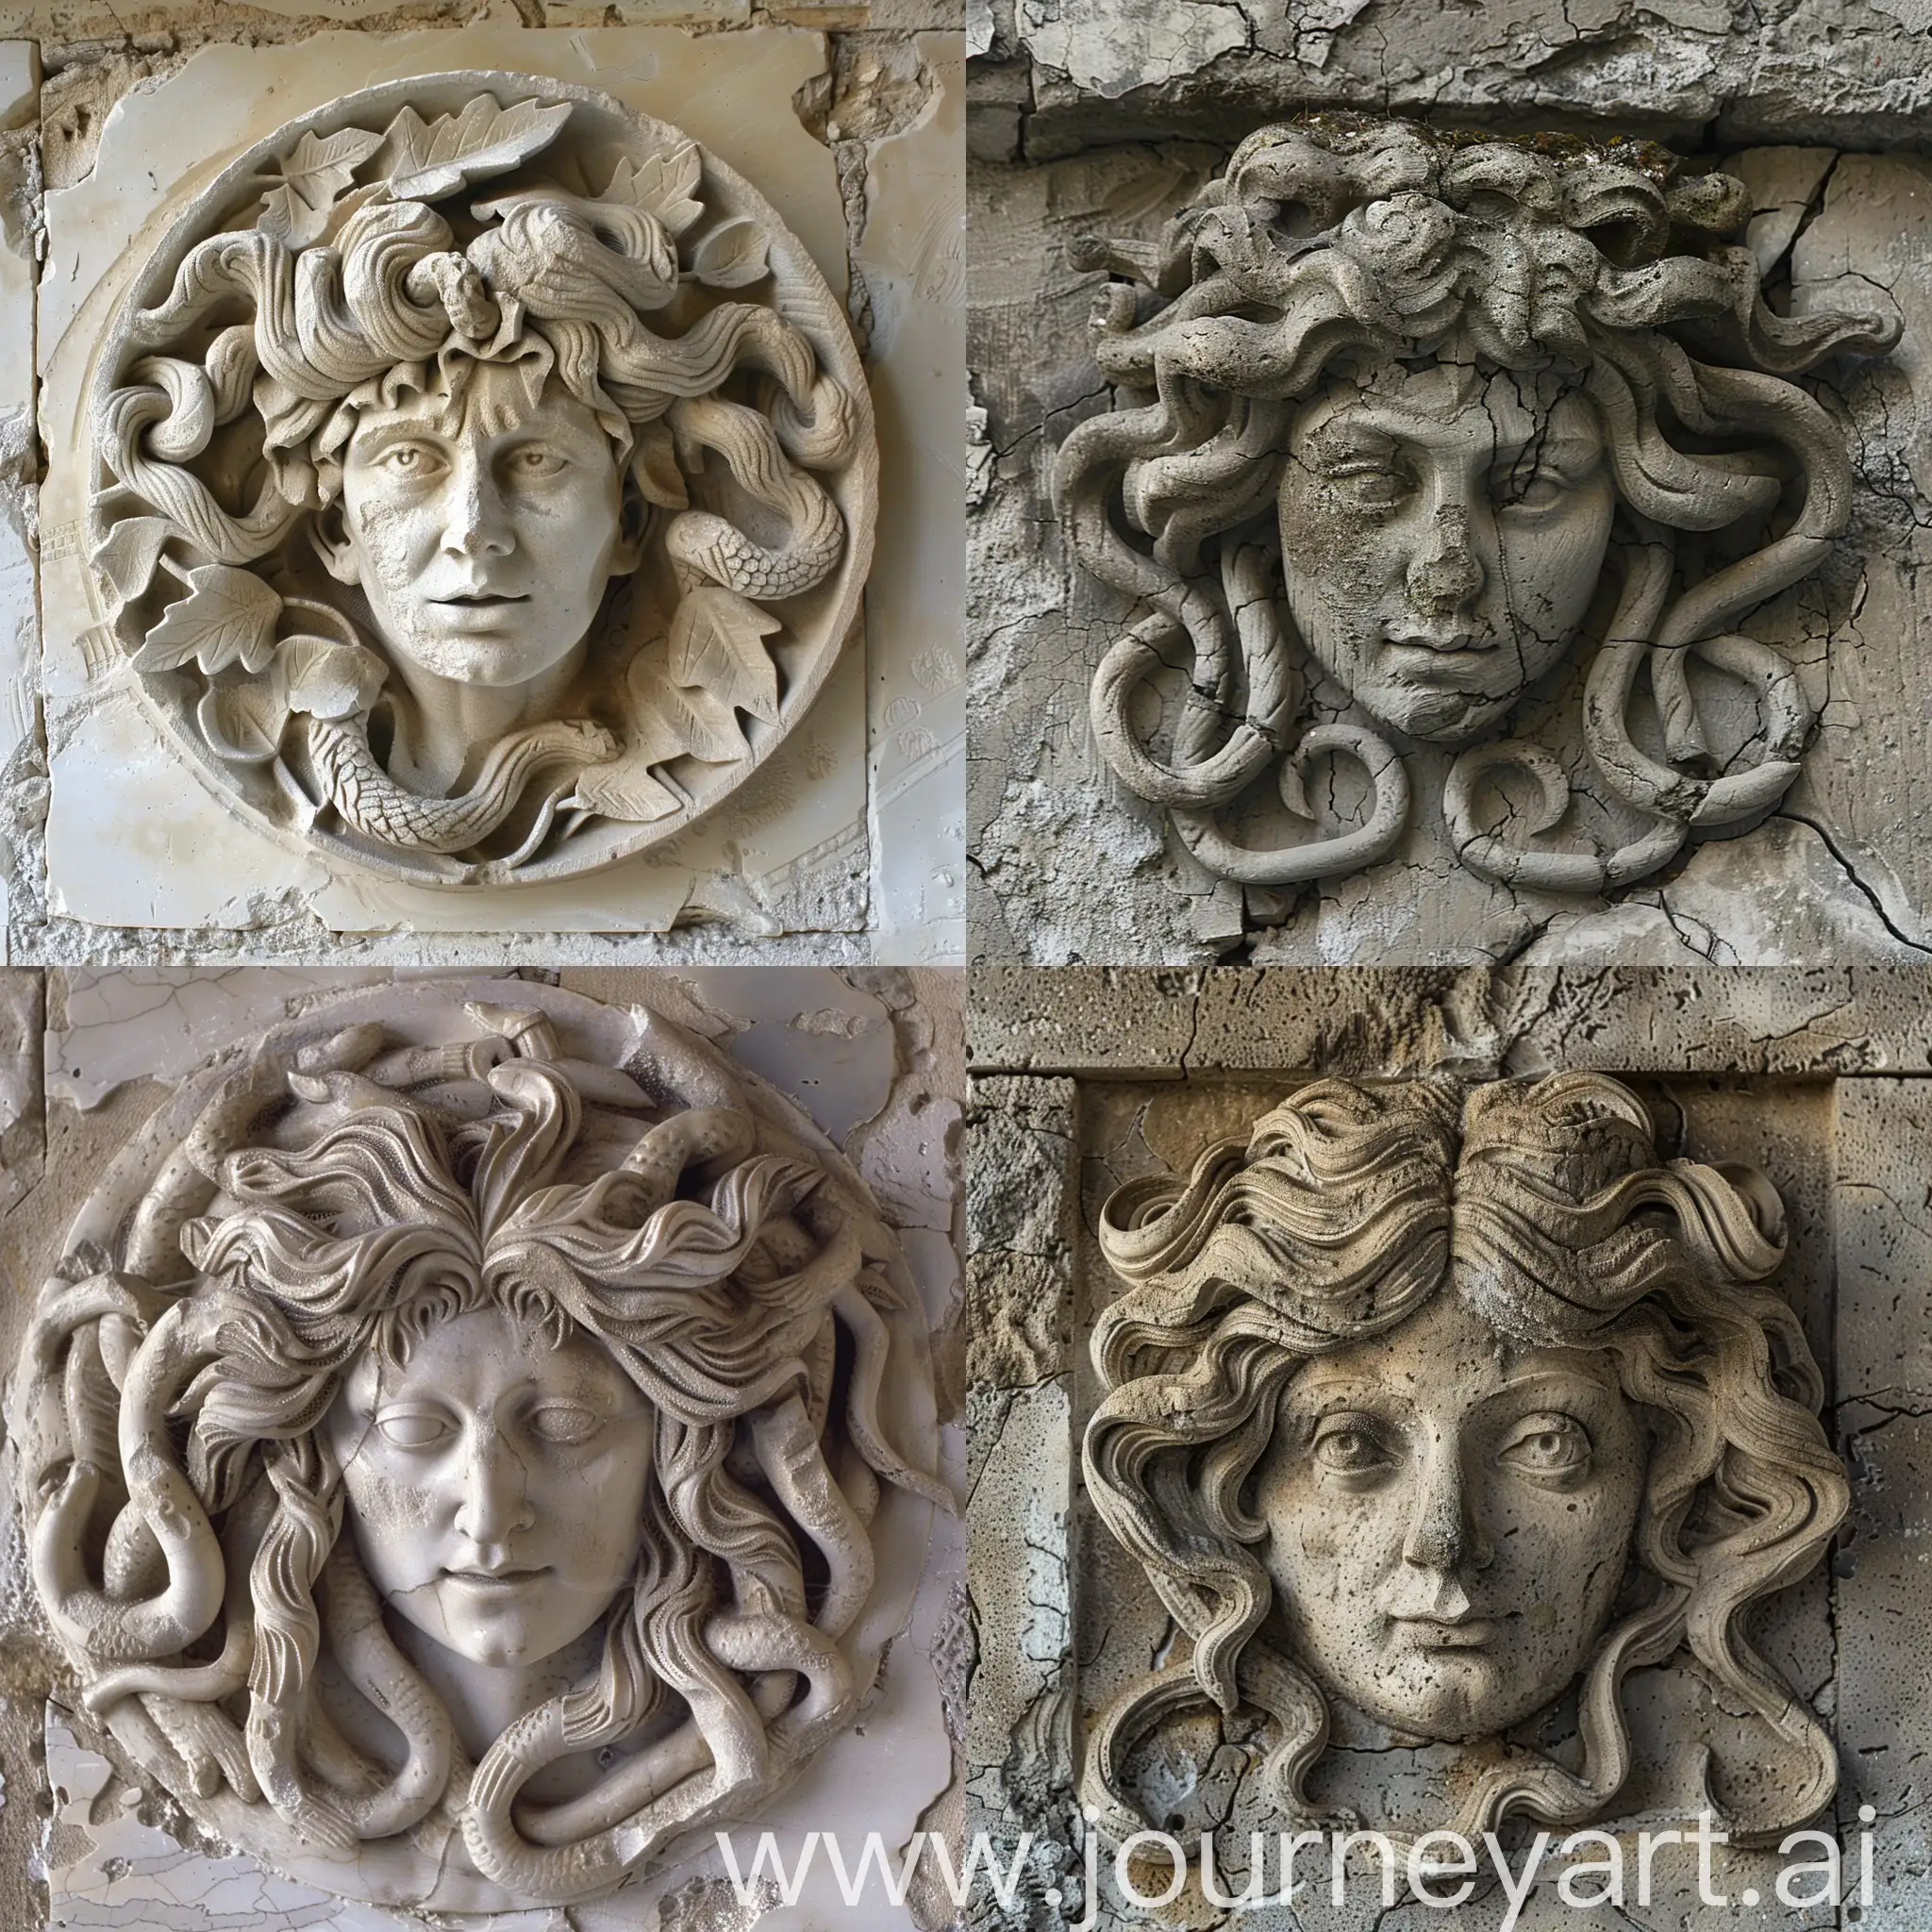 Medusa carved in stone